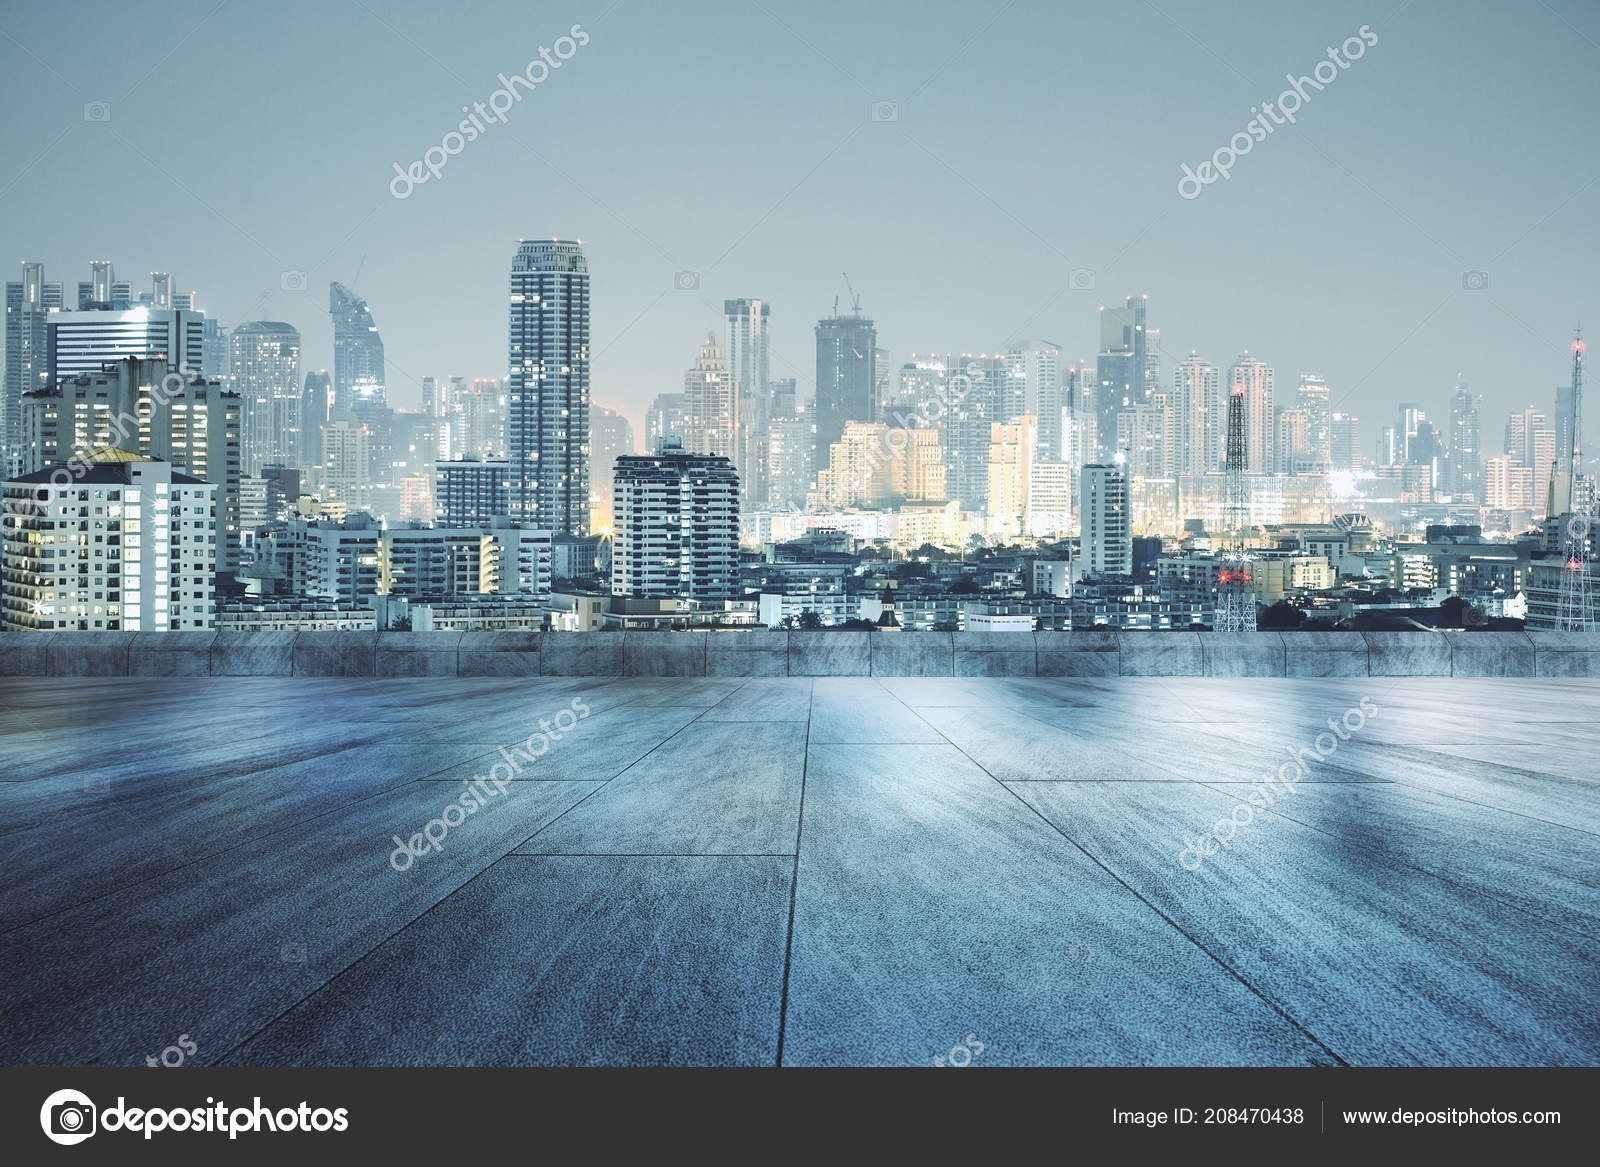 Concrete Rooftop Beautiful Night City View Wallpaper Stock Photo By C Peshkov